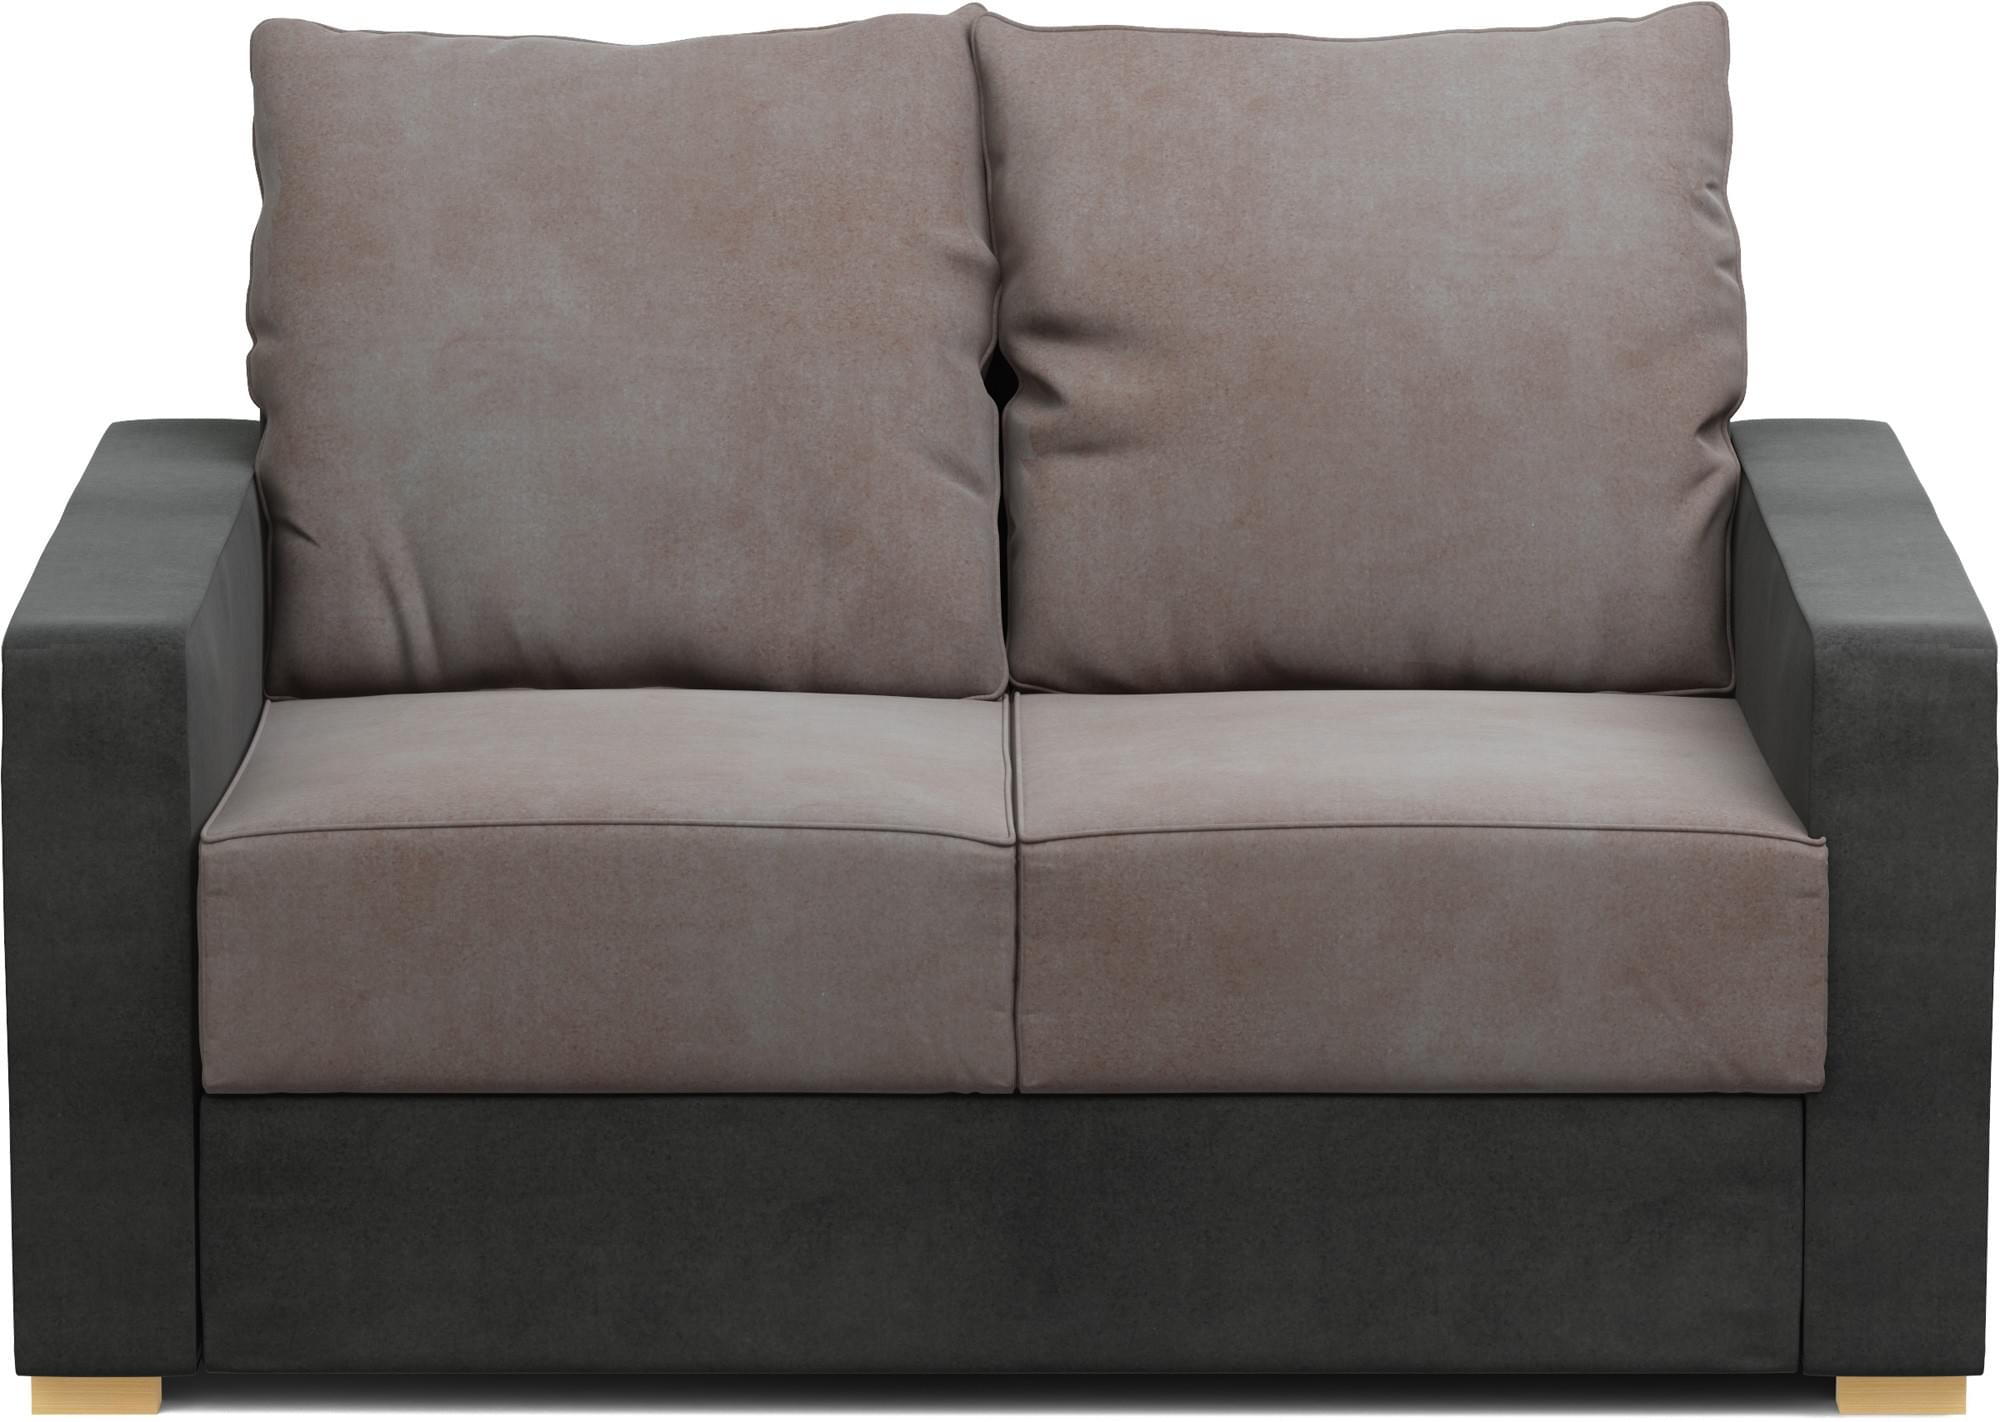 Tor 2 Seat Single Sofa Bed